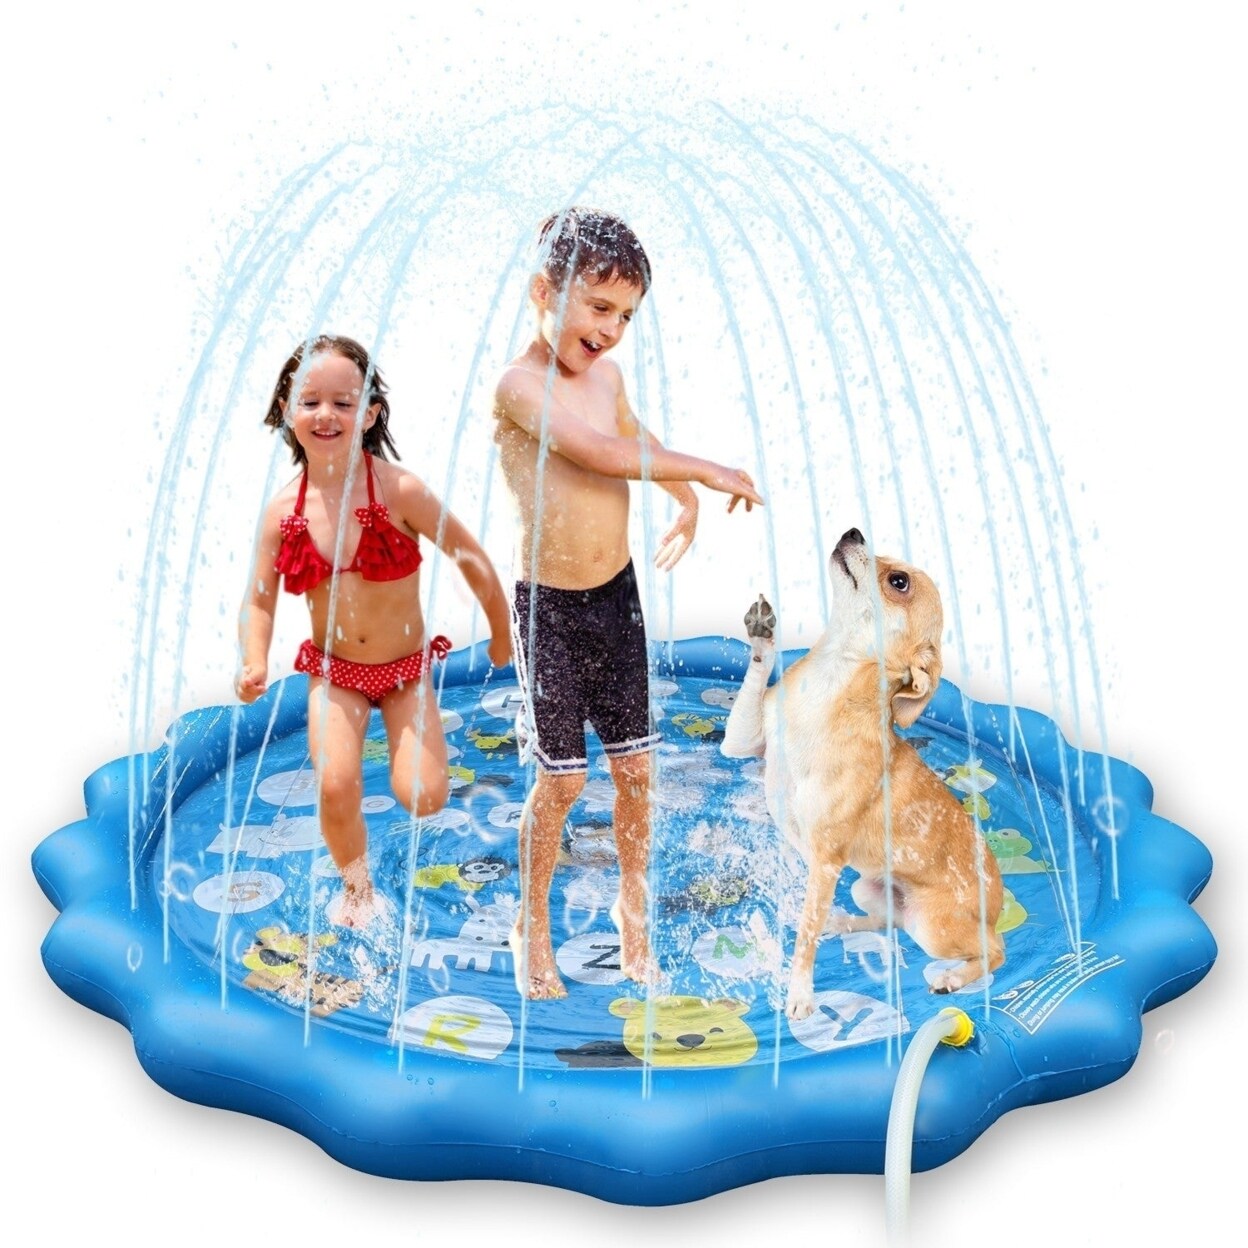 SKUSHOPS Sprinkler Splash Pad For Kids 68IN Inflatable Blow Up Pool Sprinkle Play Mat Summer Outdoor Water Toys